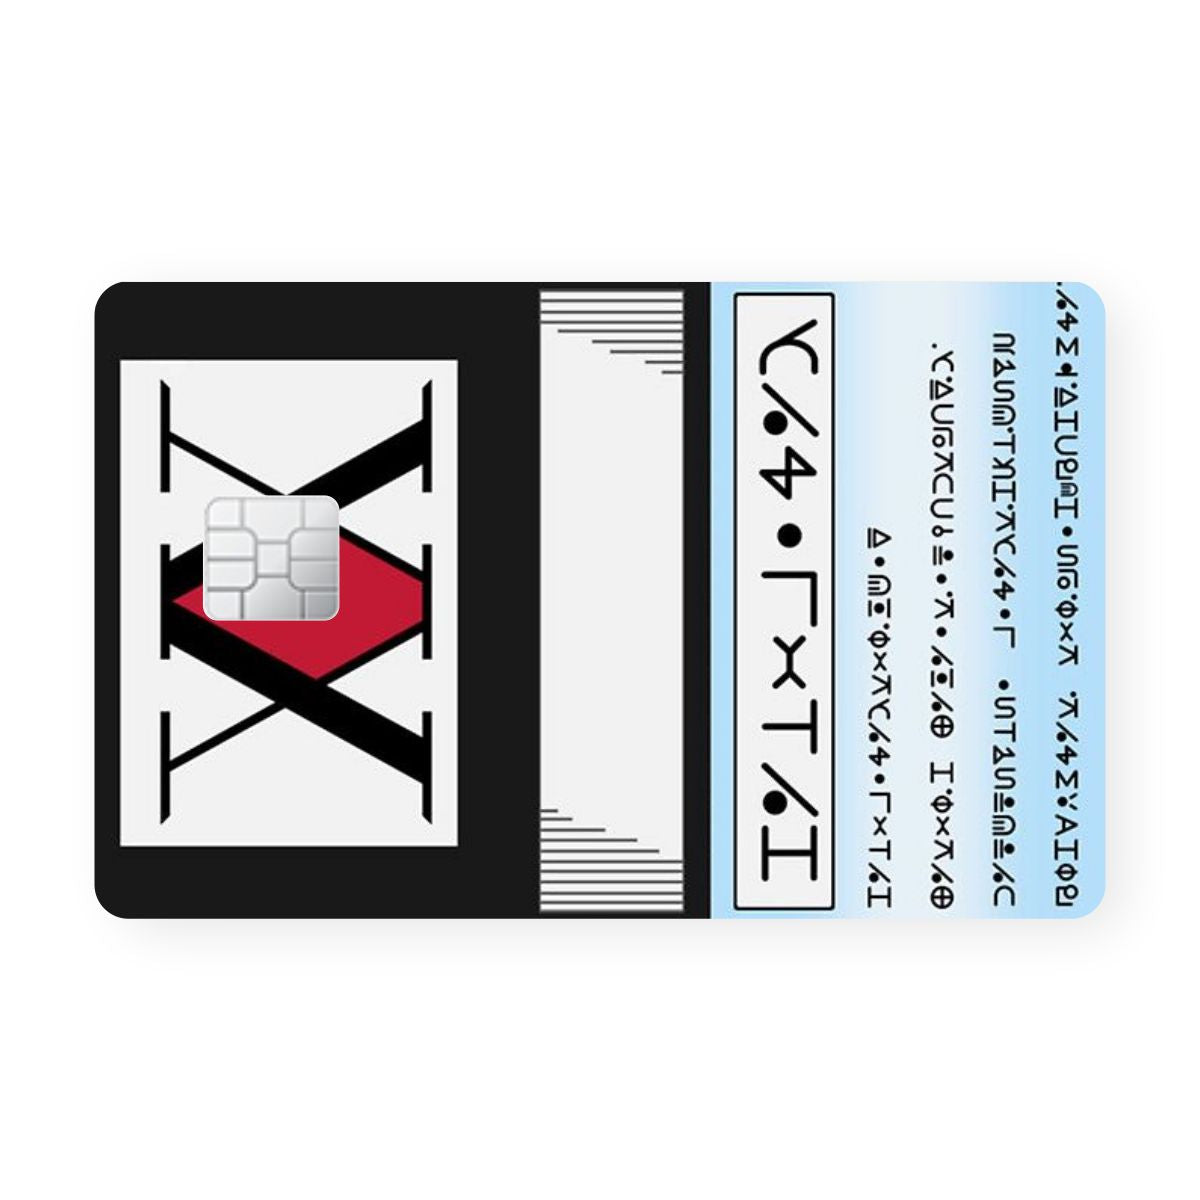 Acrylic Wolf Debit Card Skin & Card Skin. Anime Debit Card Skins.